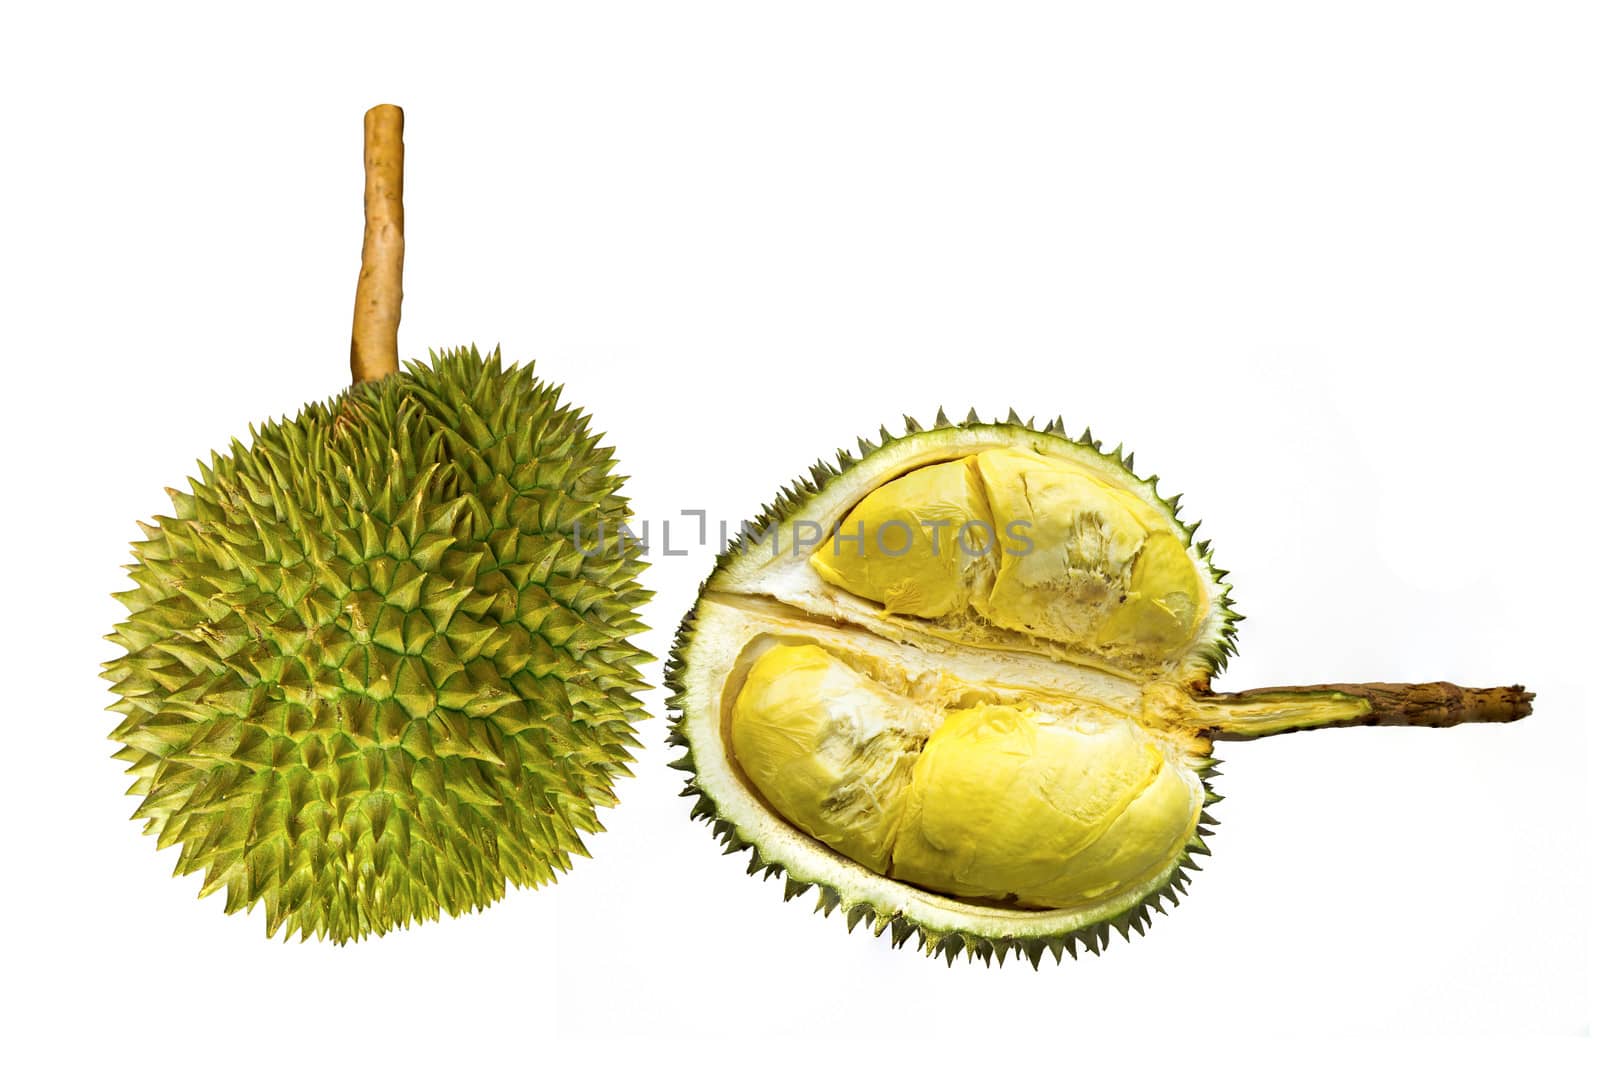 durian by narinbg